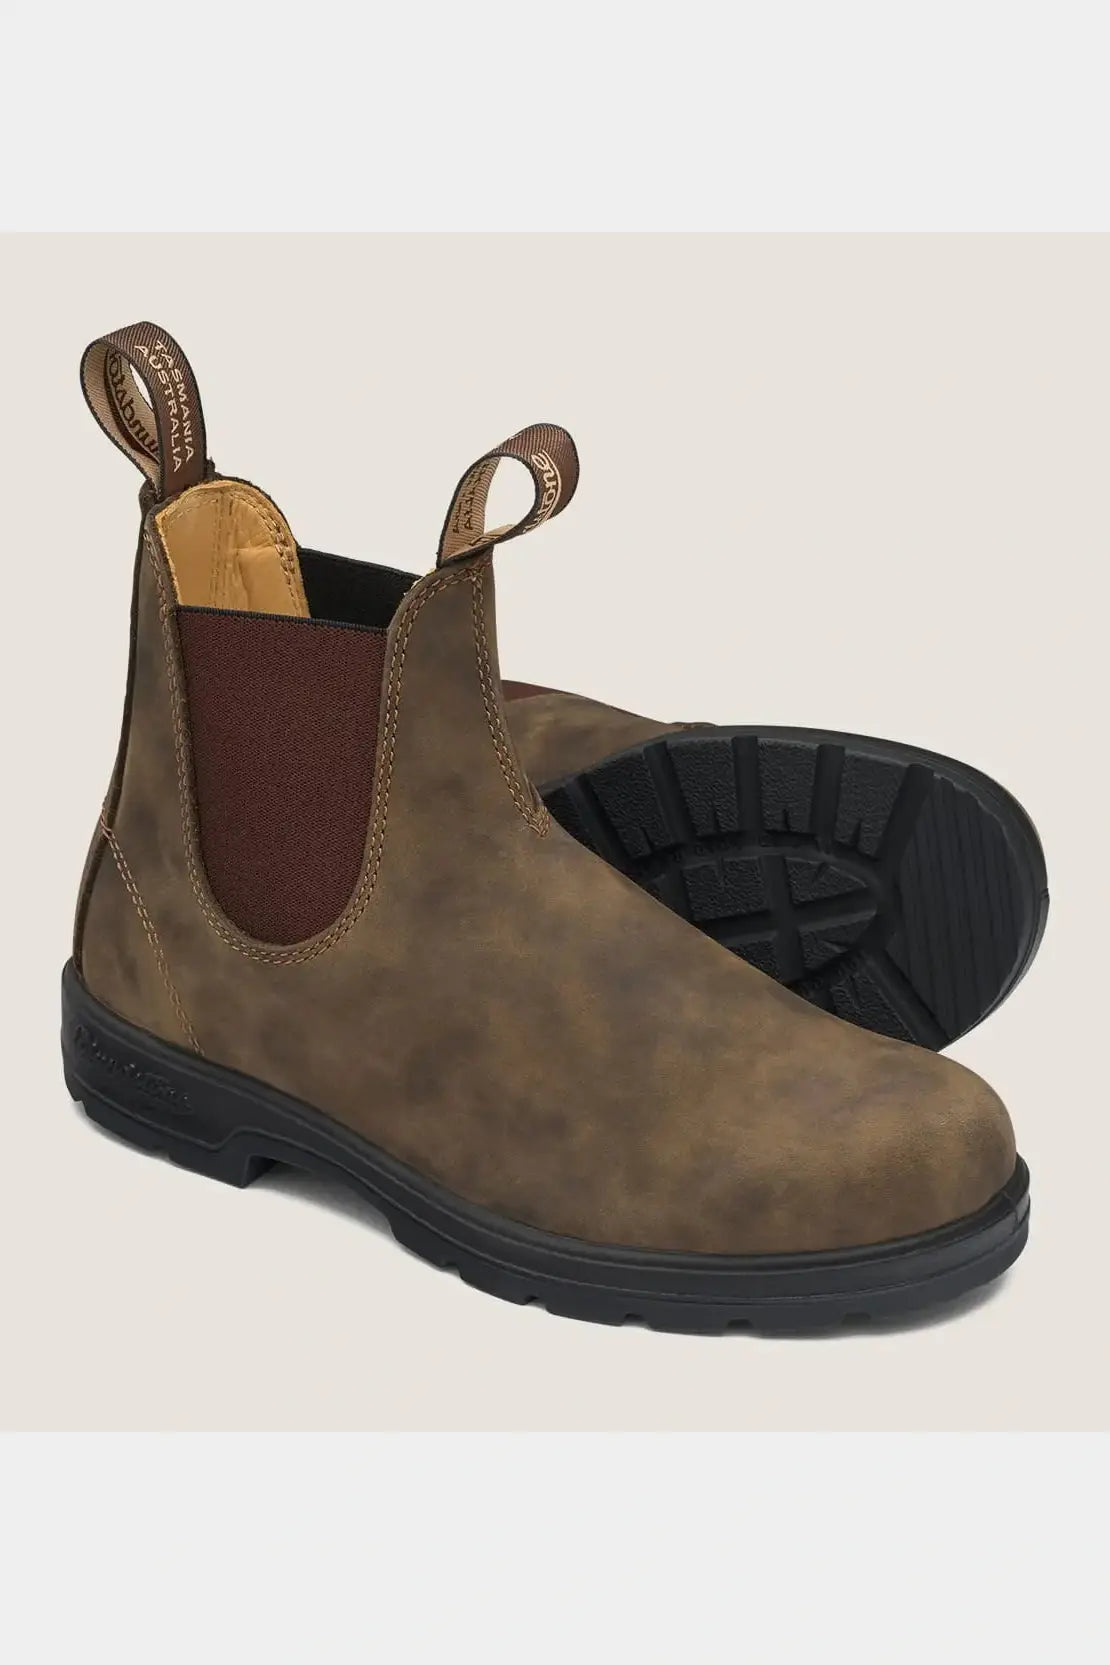 Blundstone 585 classics chelsea boots - rustic brown